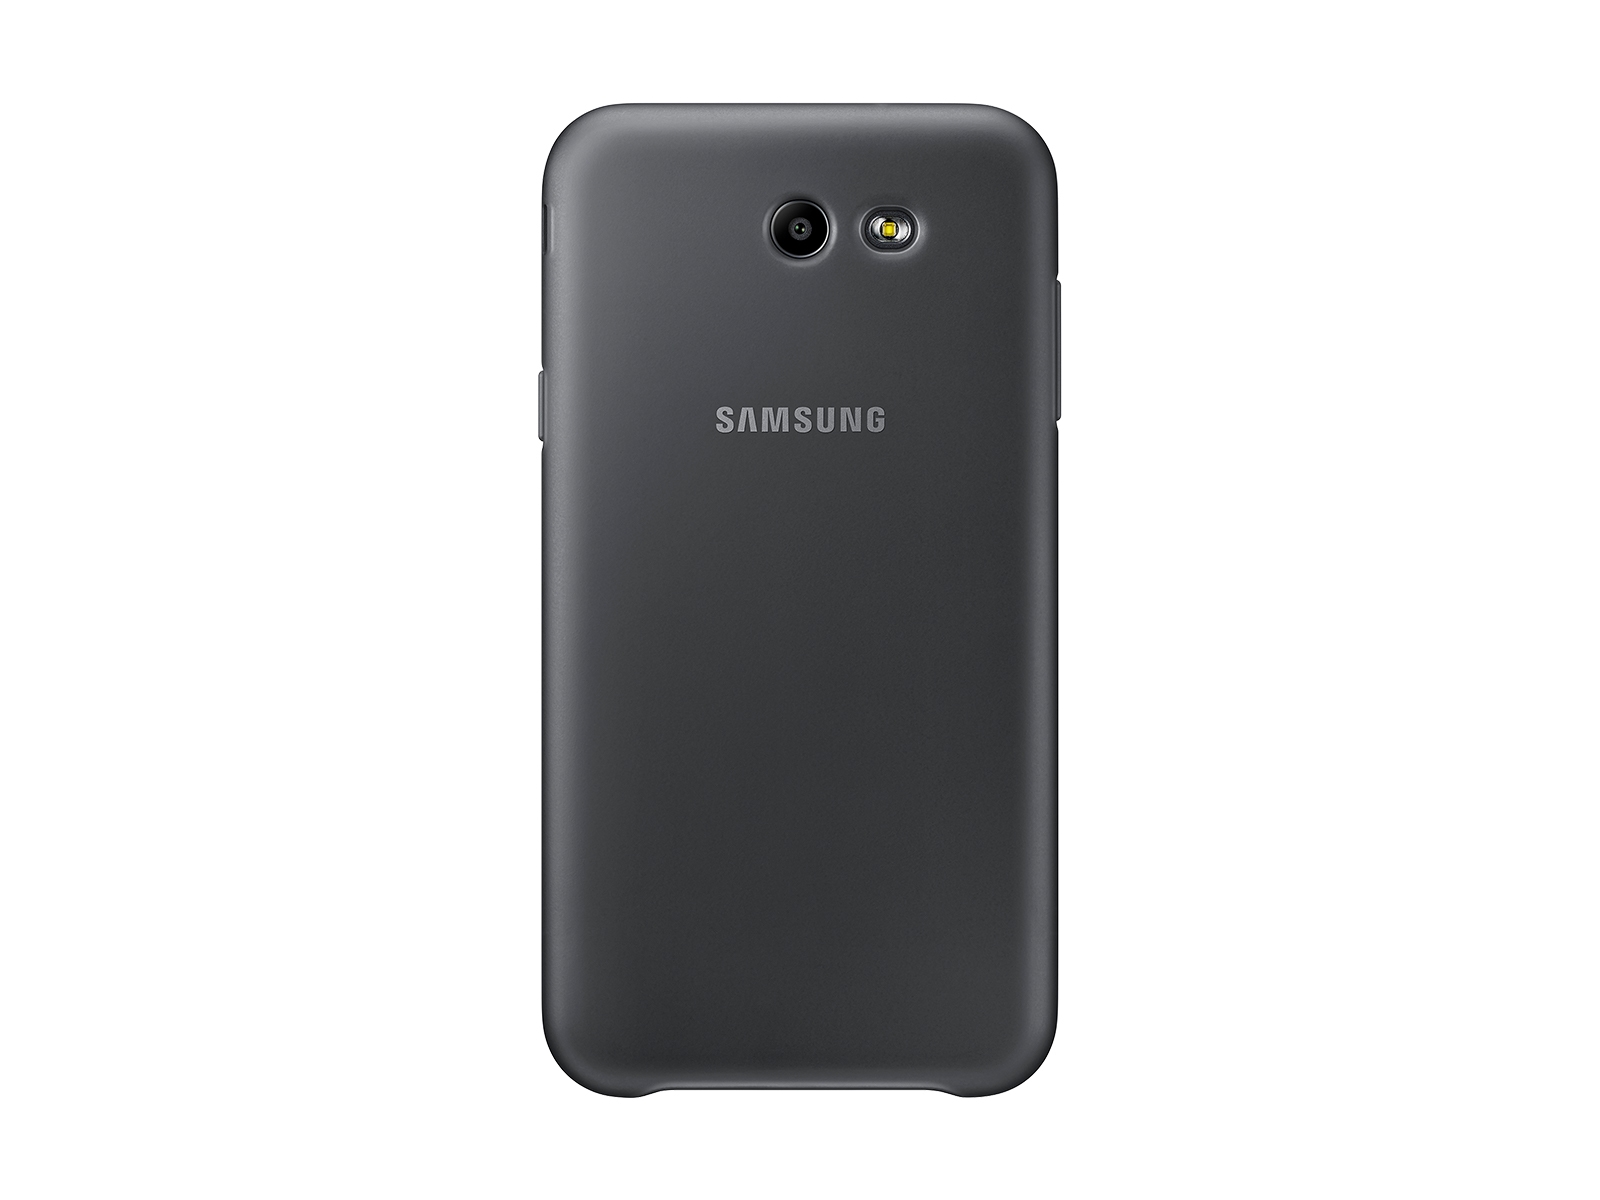 Galaxy J3 Protective Cover Black Mobile Accessories Ef Pj327cbegus Samsung Us